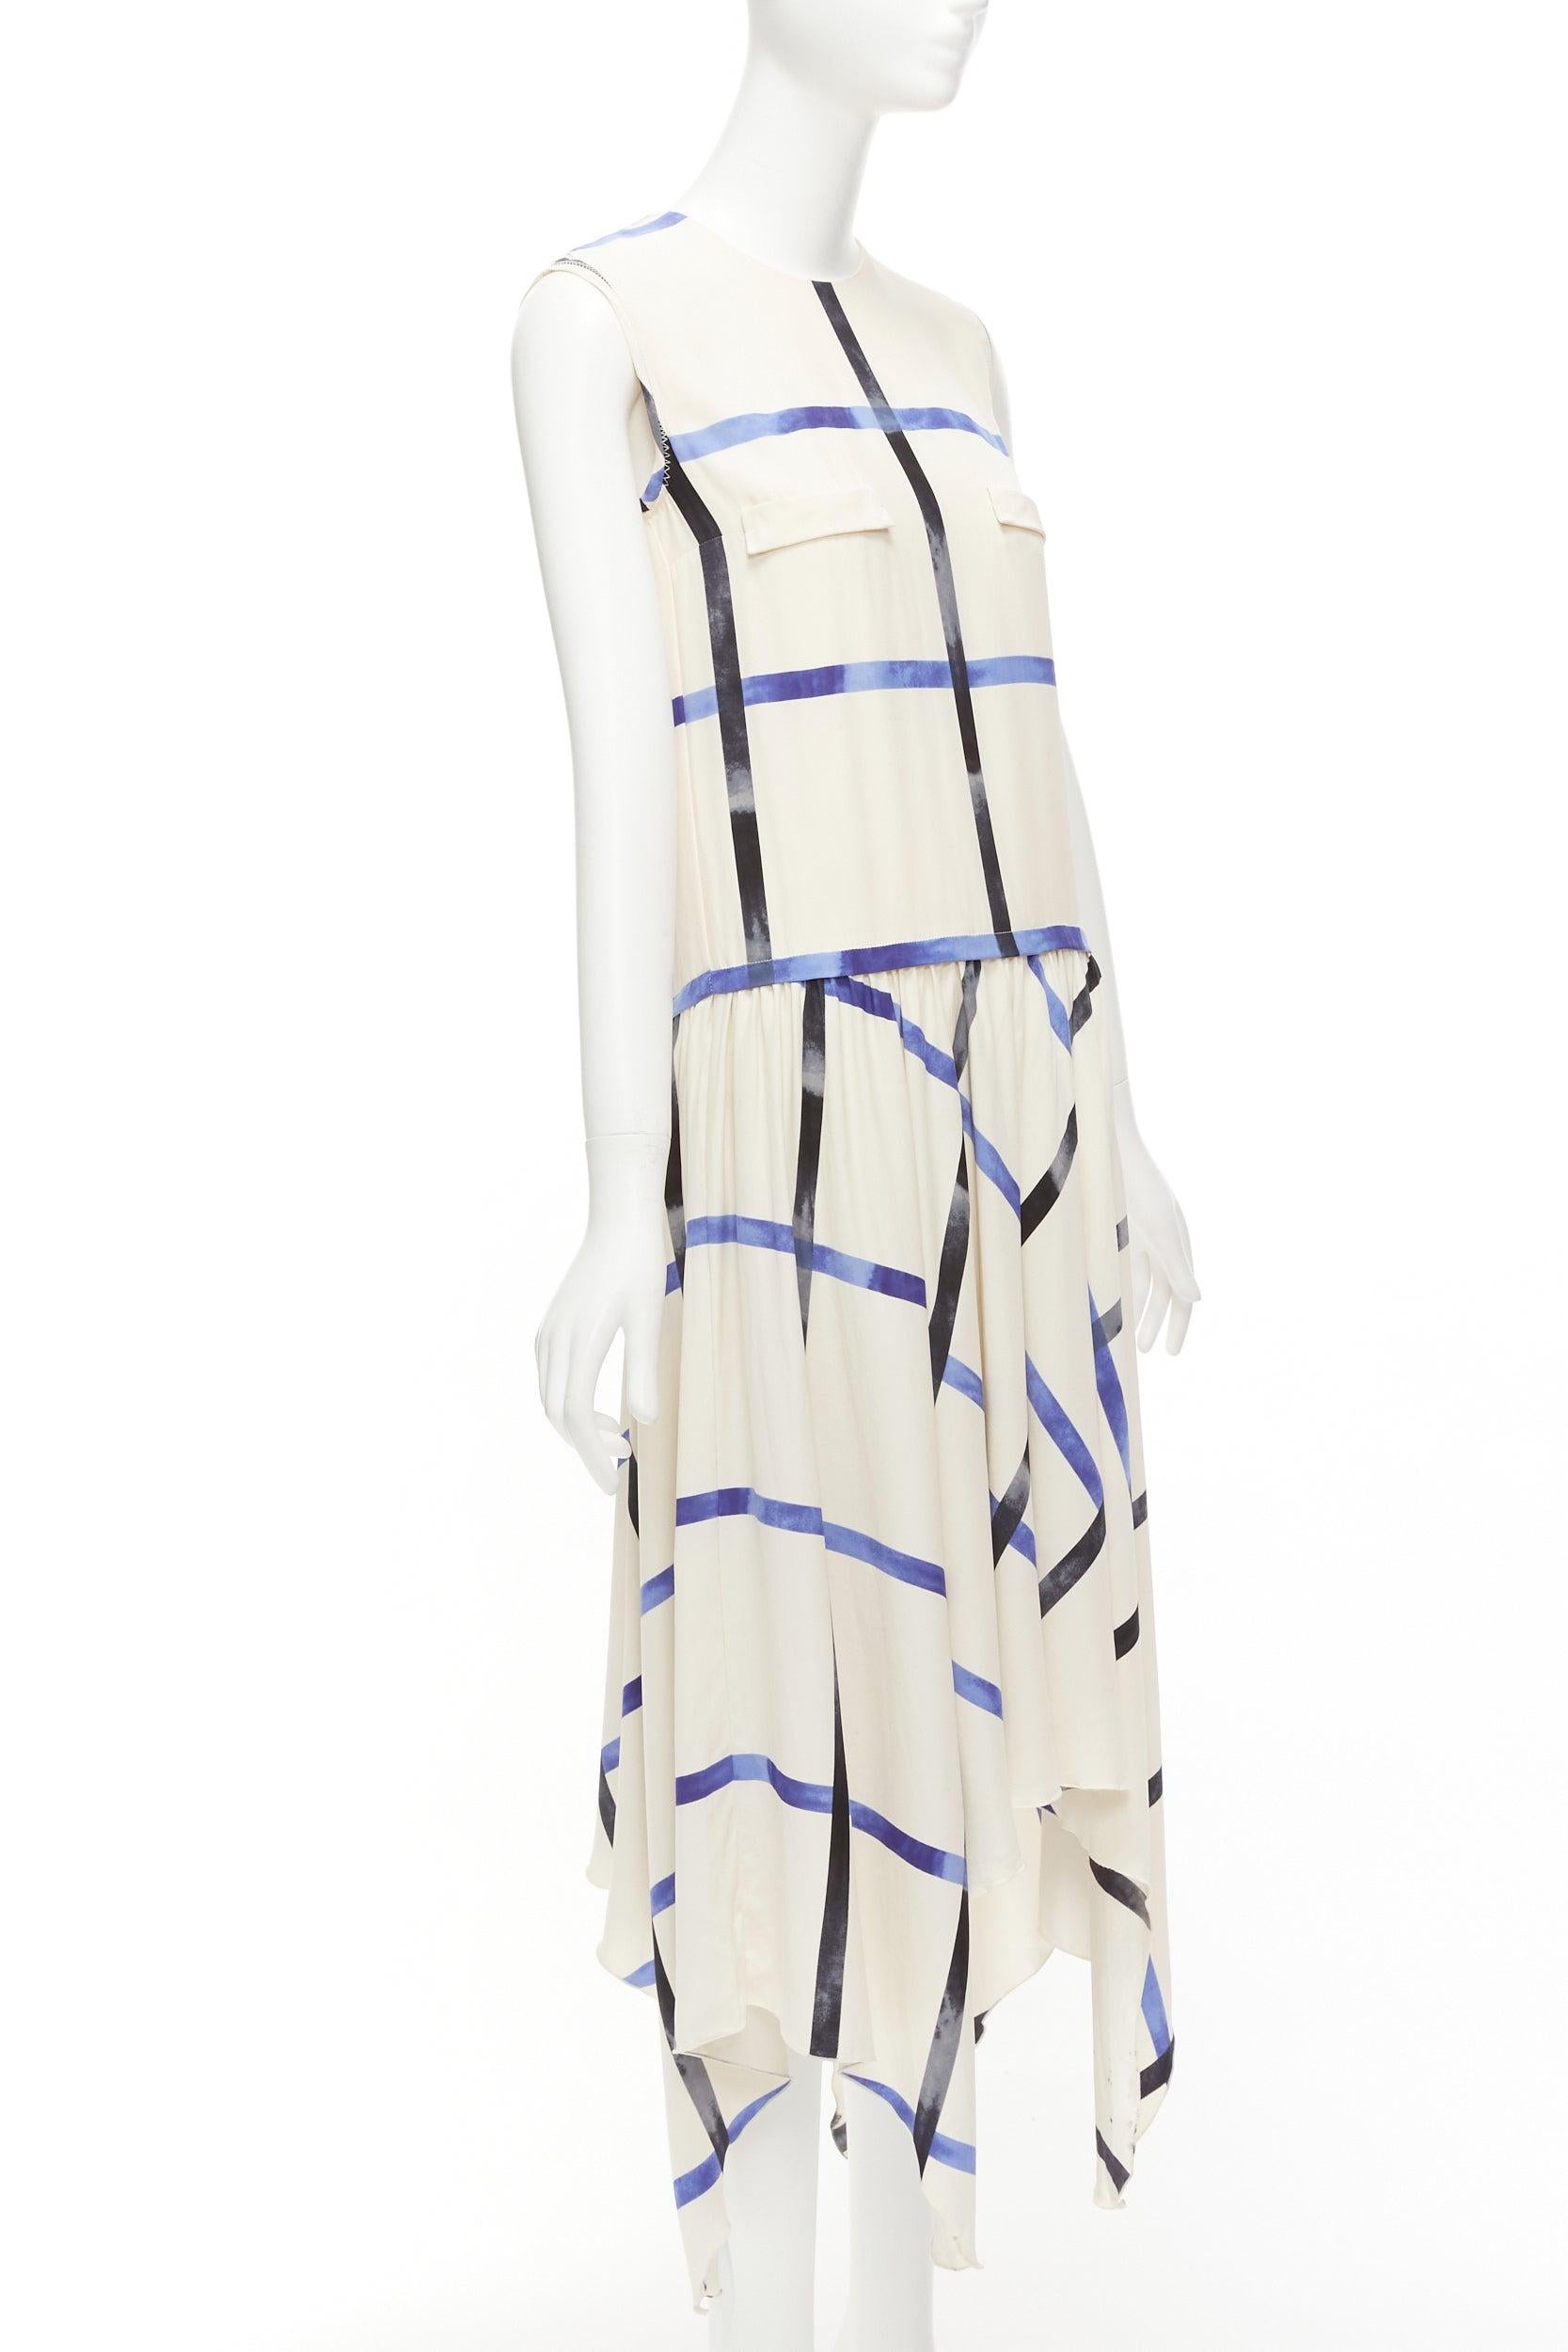 CELINE Phoebe Philo 2014 Runway cream blue 100% silk bias cut dress In Fair Condition For Sale In Hong Kong, NT